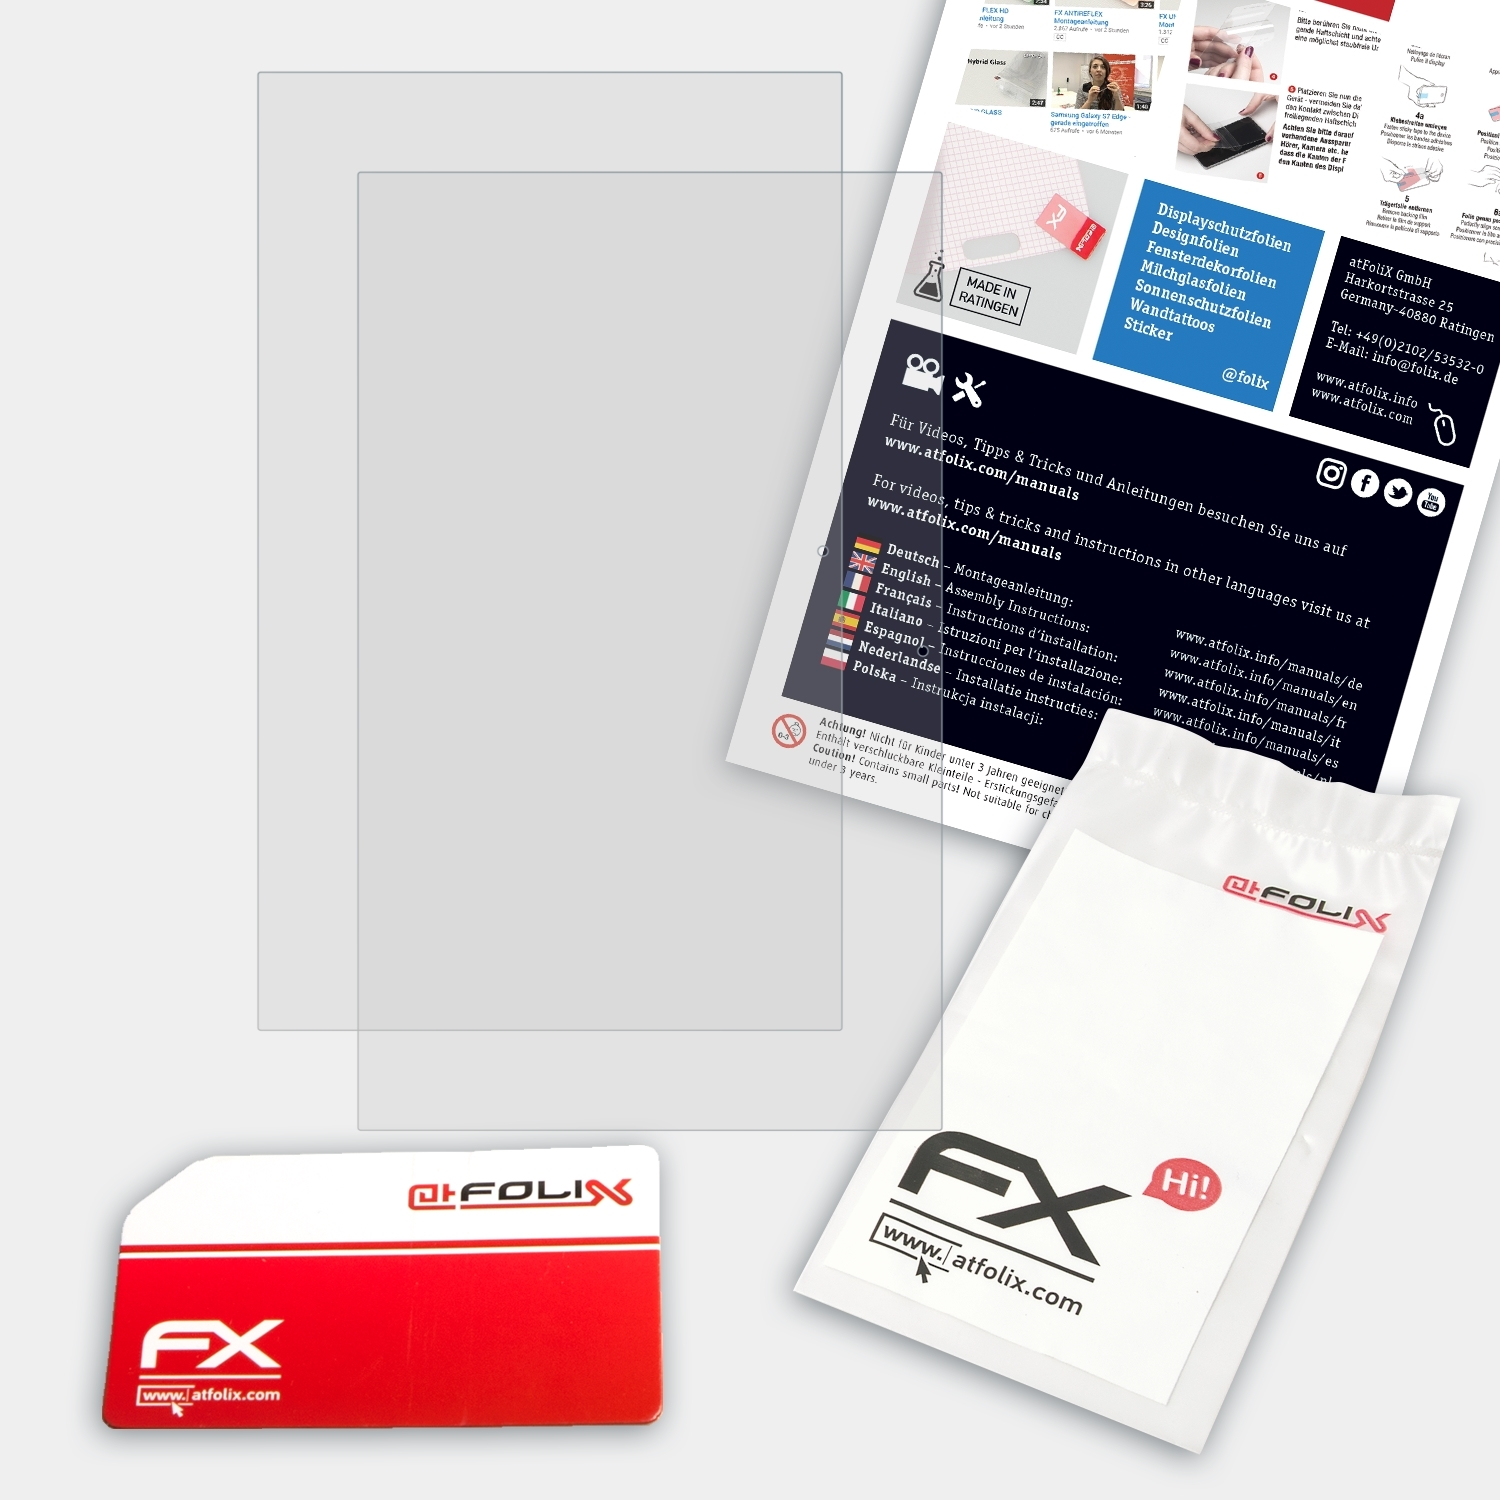 ATFOLIX 2x FX-Antireflex V2) Xoro MegaPad 2404 Displayschutz(für